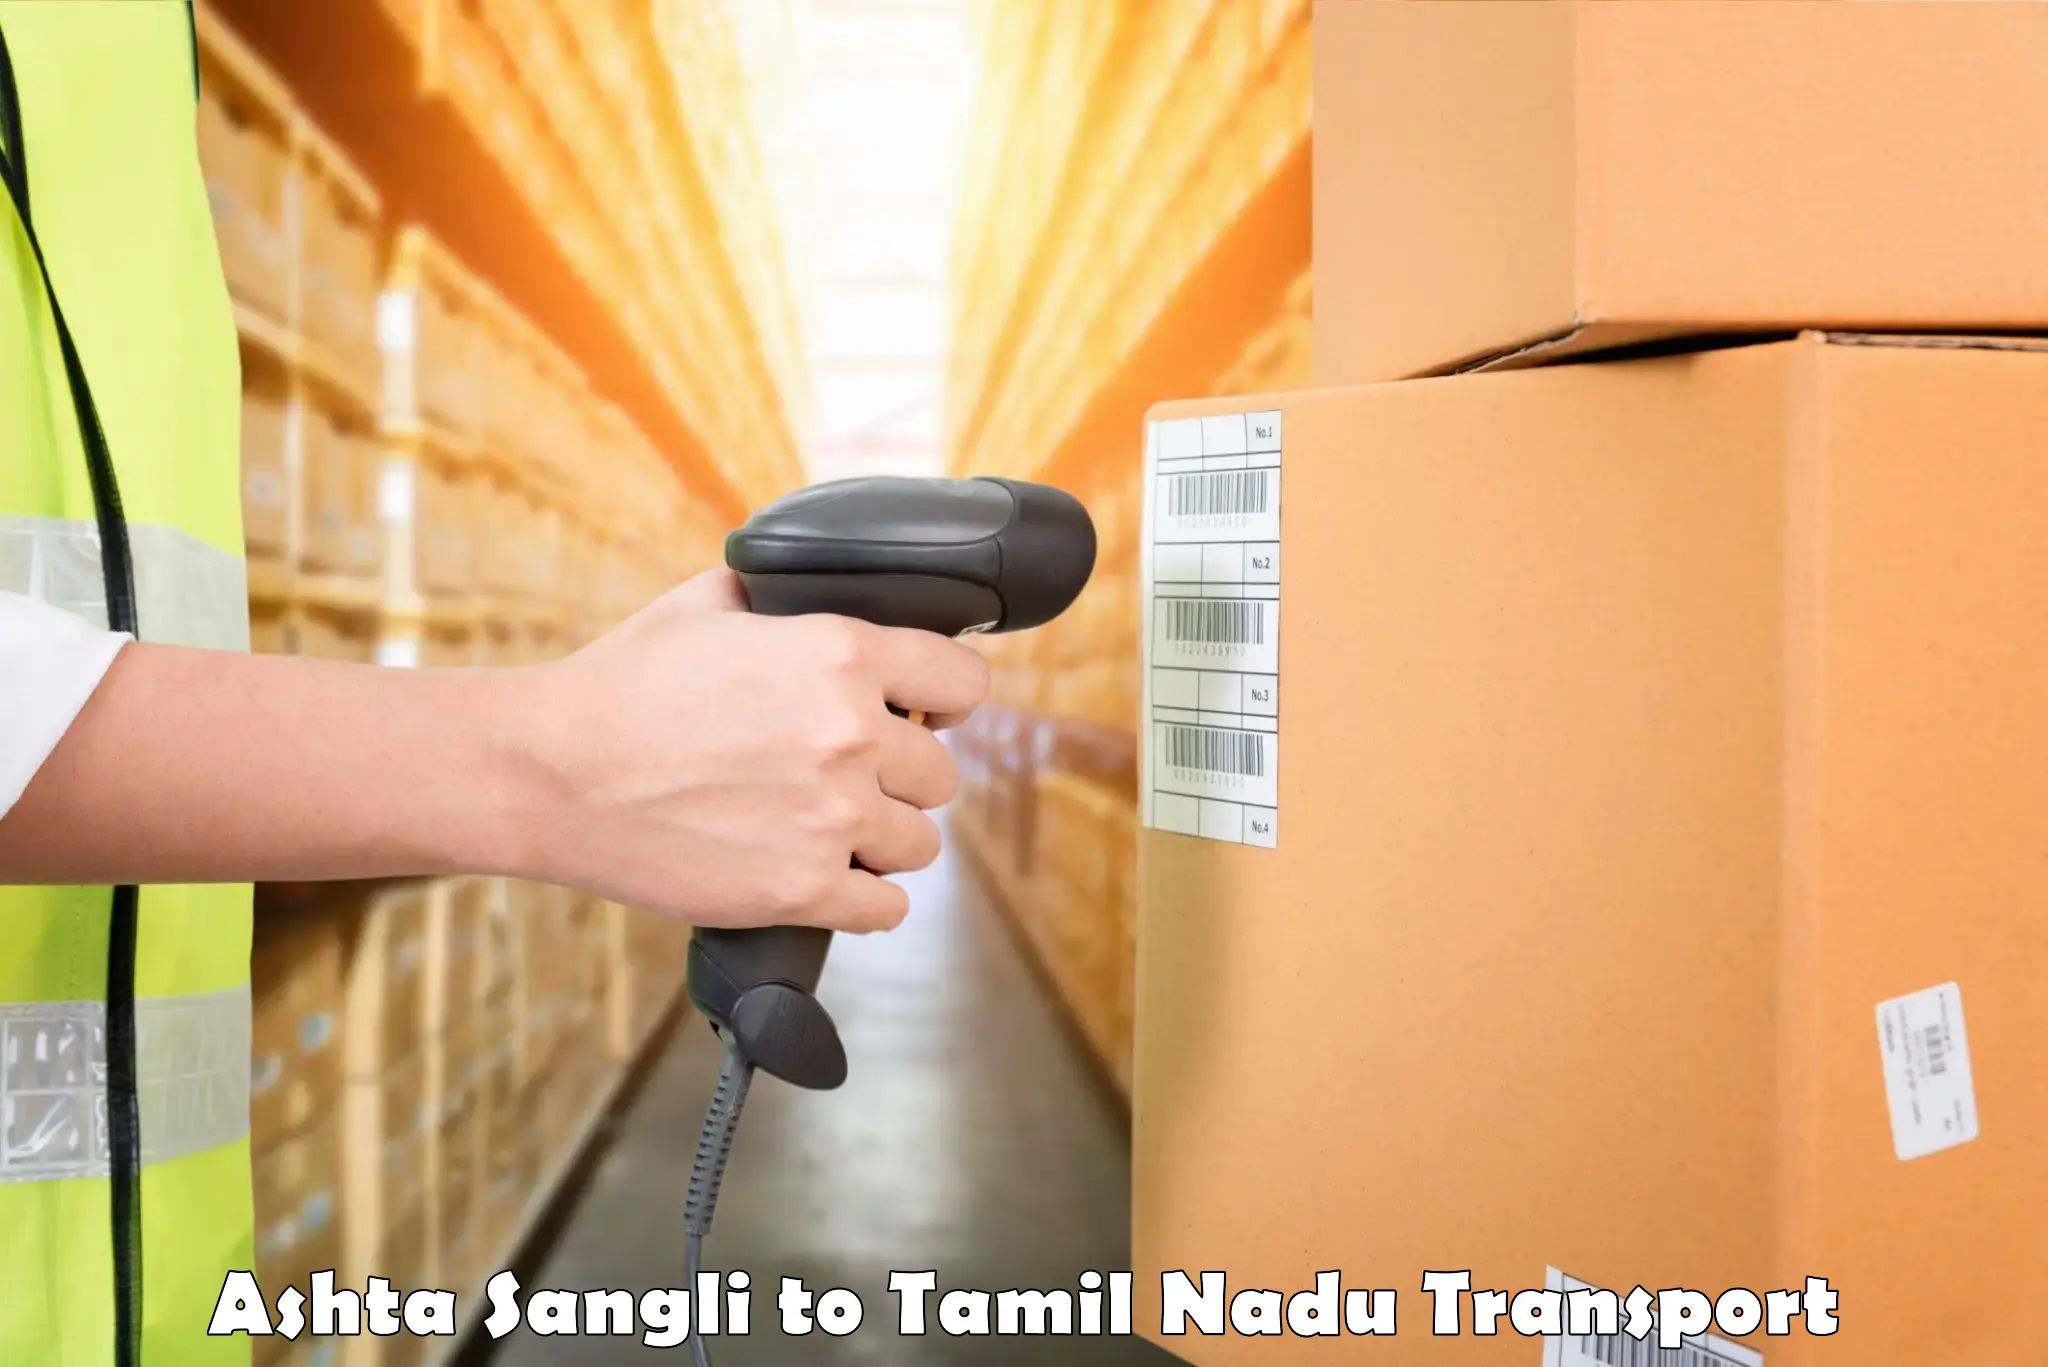 Truck transport companies in India Ashta Sangli to Thirukoilure